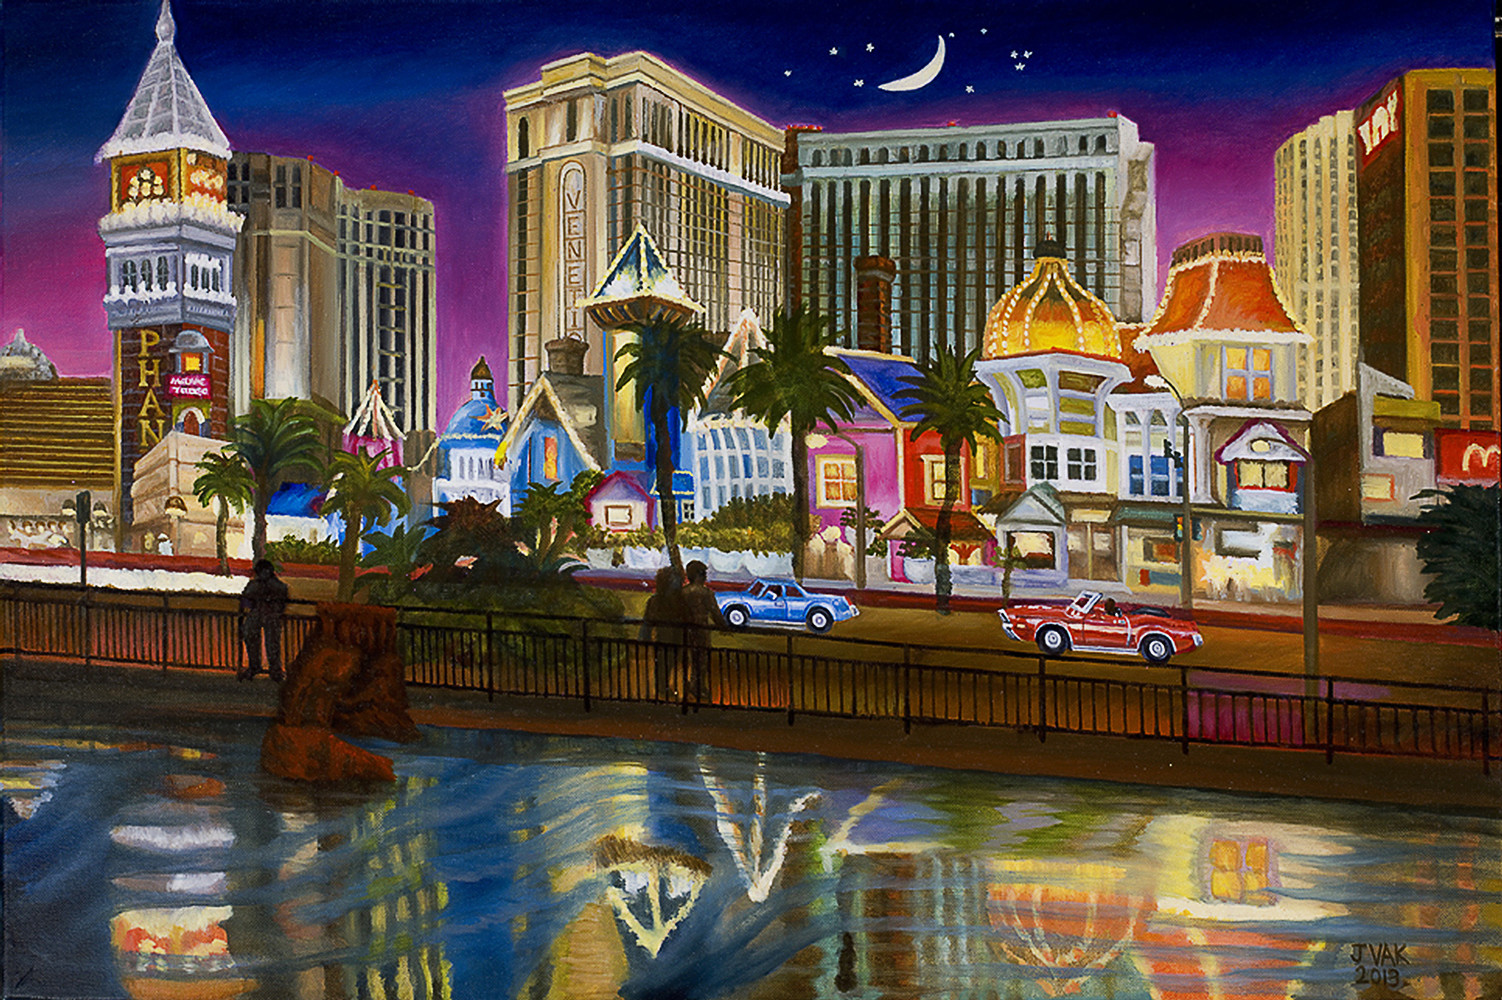 Reflections of Las Vegas
20x30 Original Oil
$4200
2013